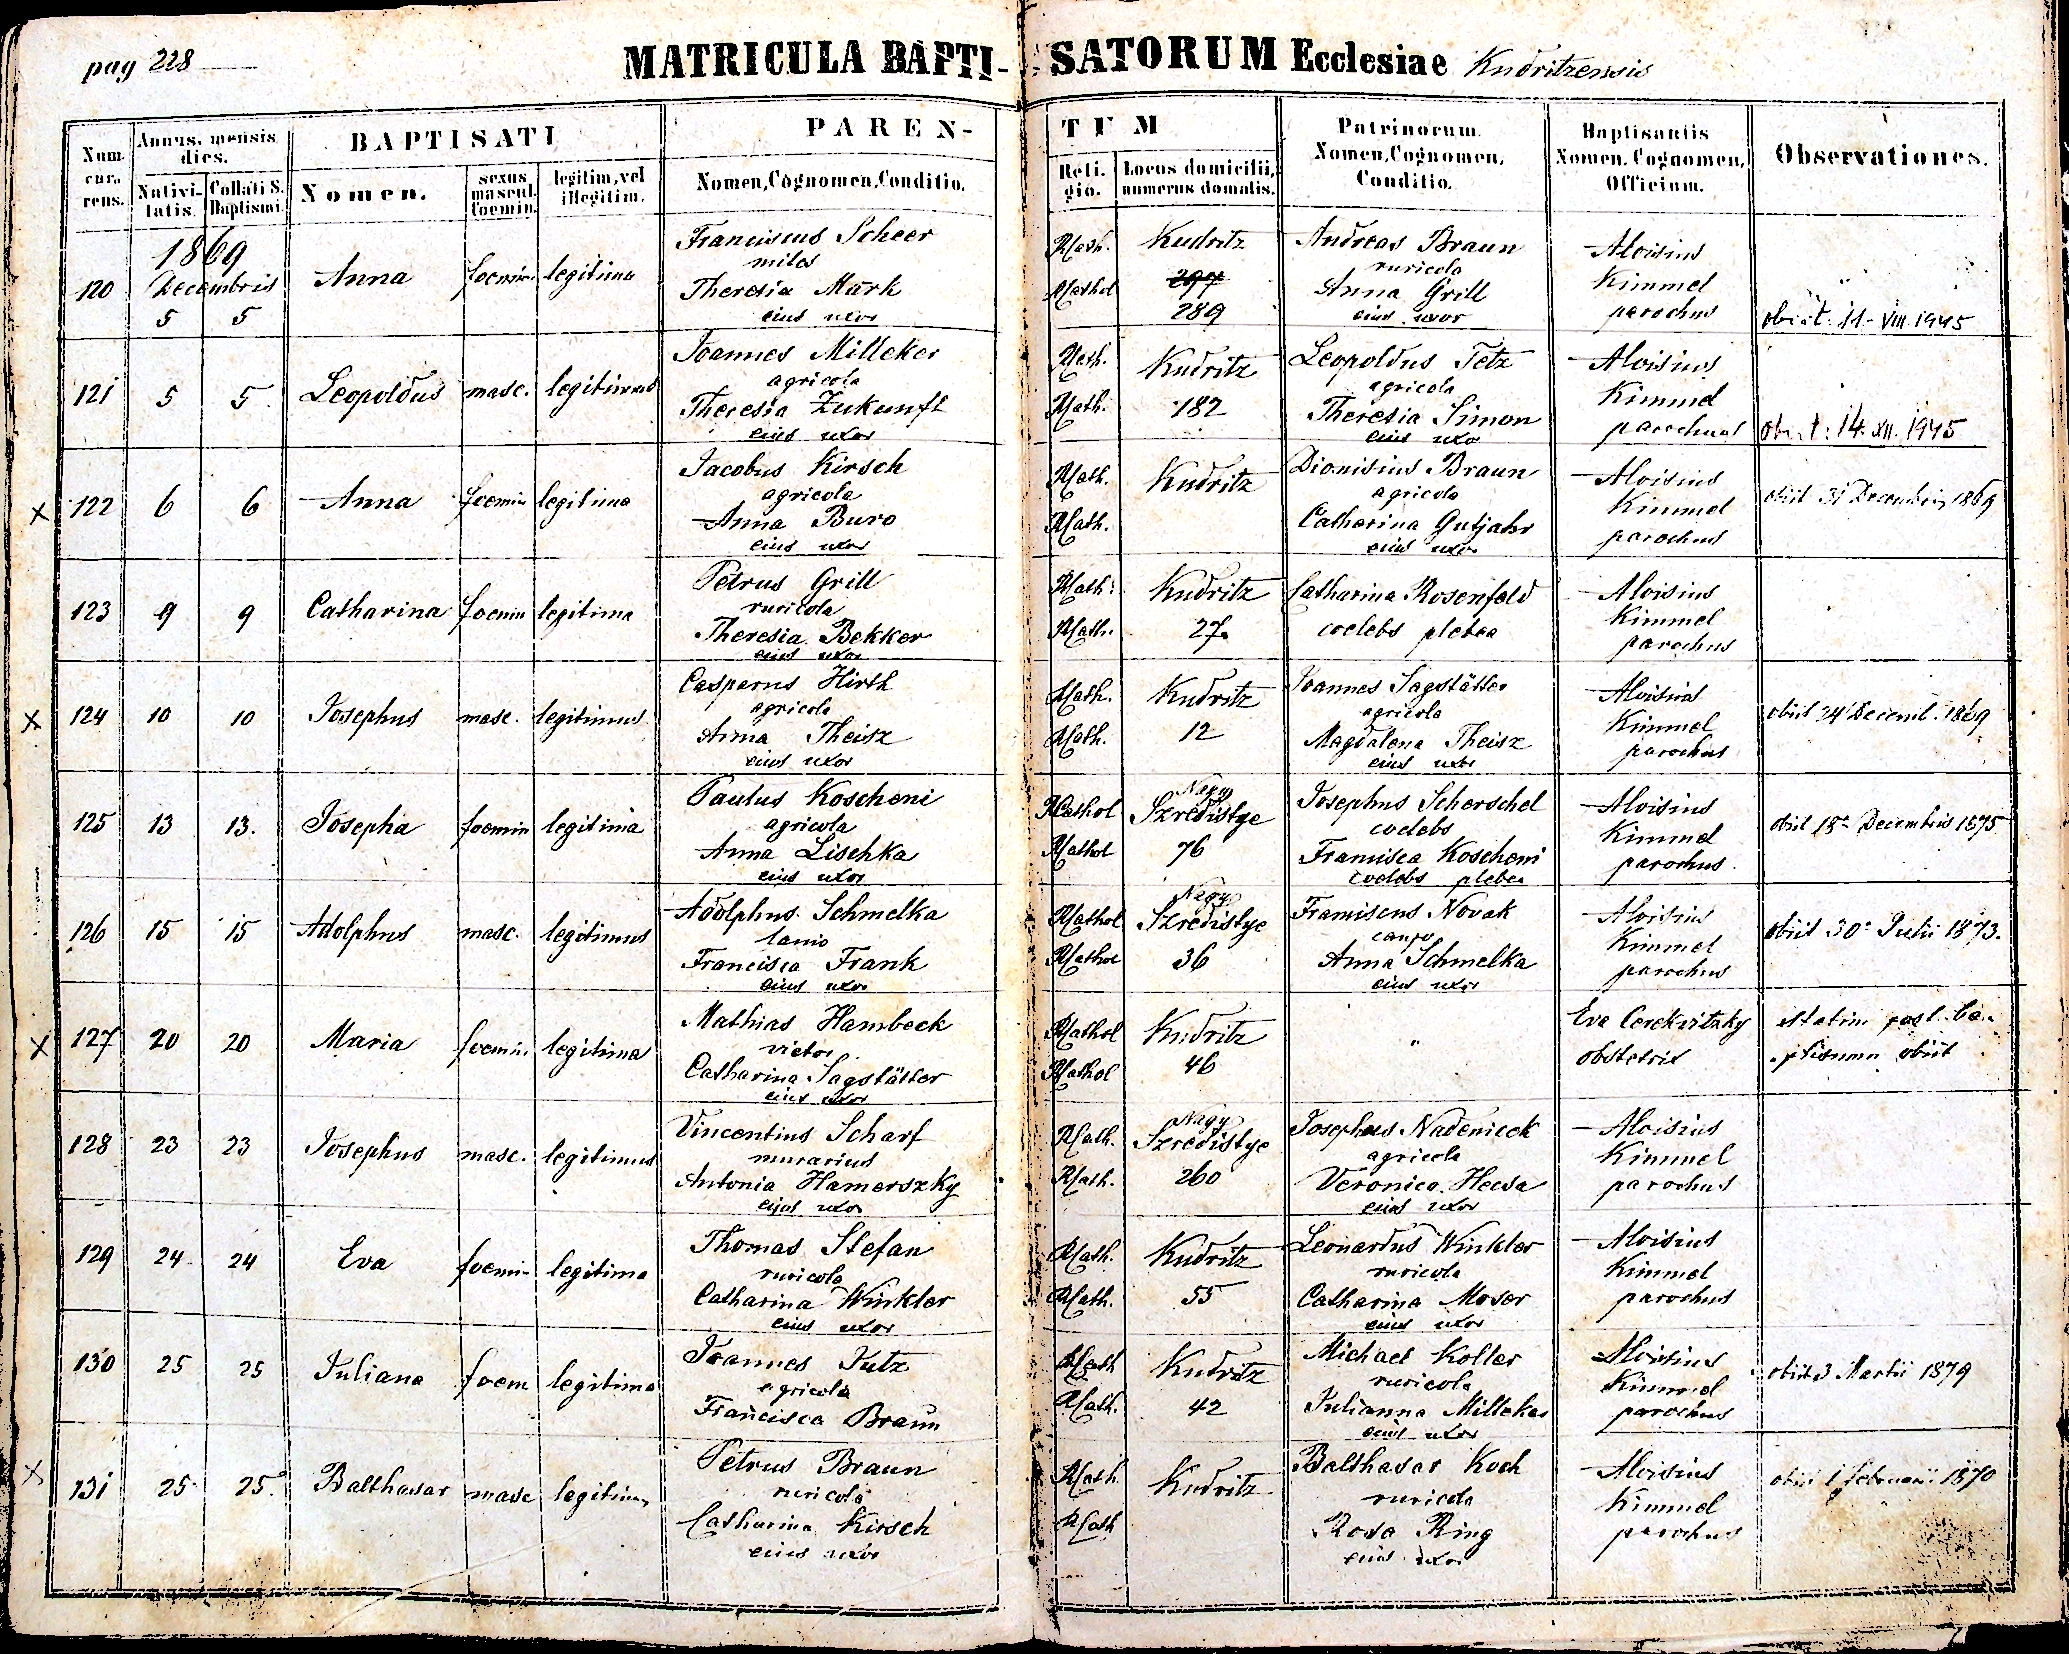 images/church_records/BIRTHS/1852-1870B/228